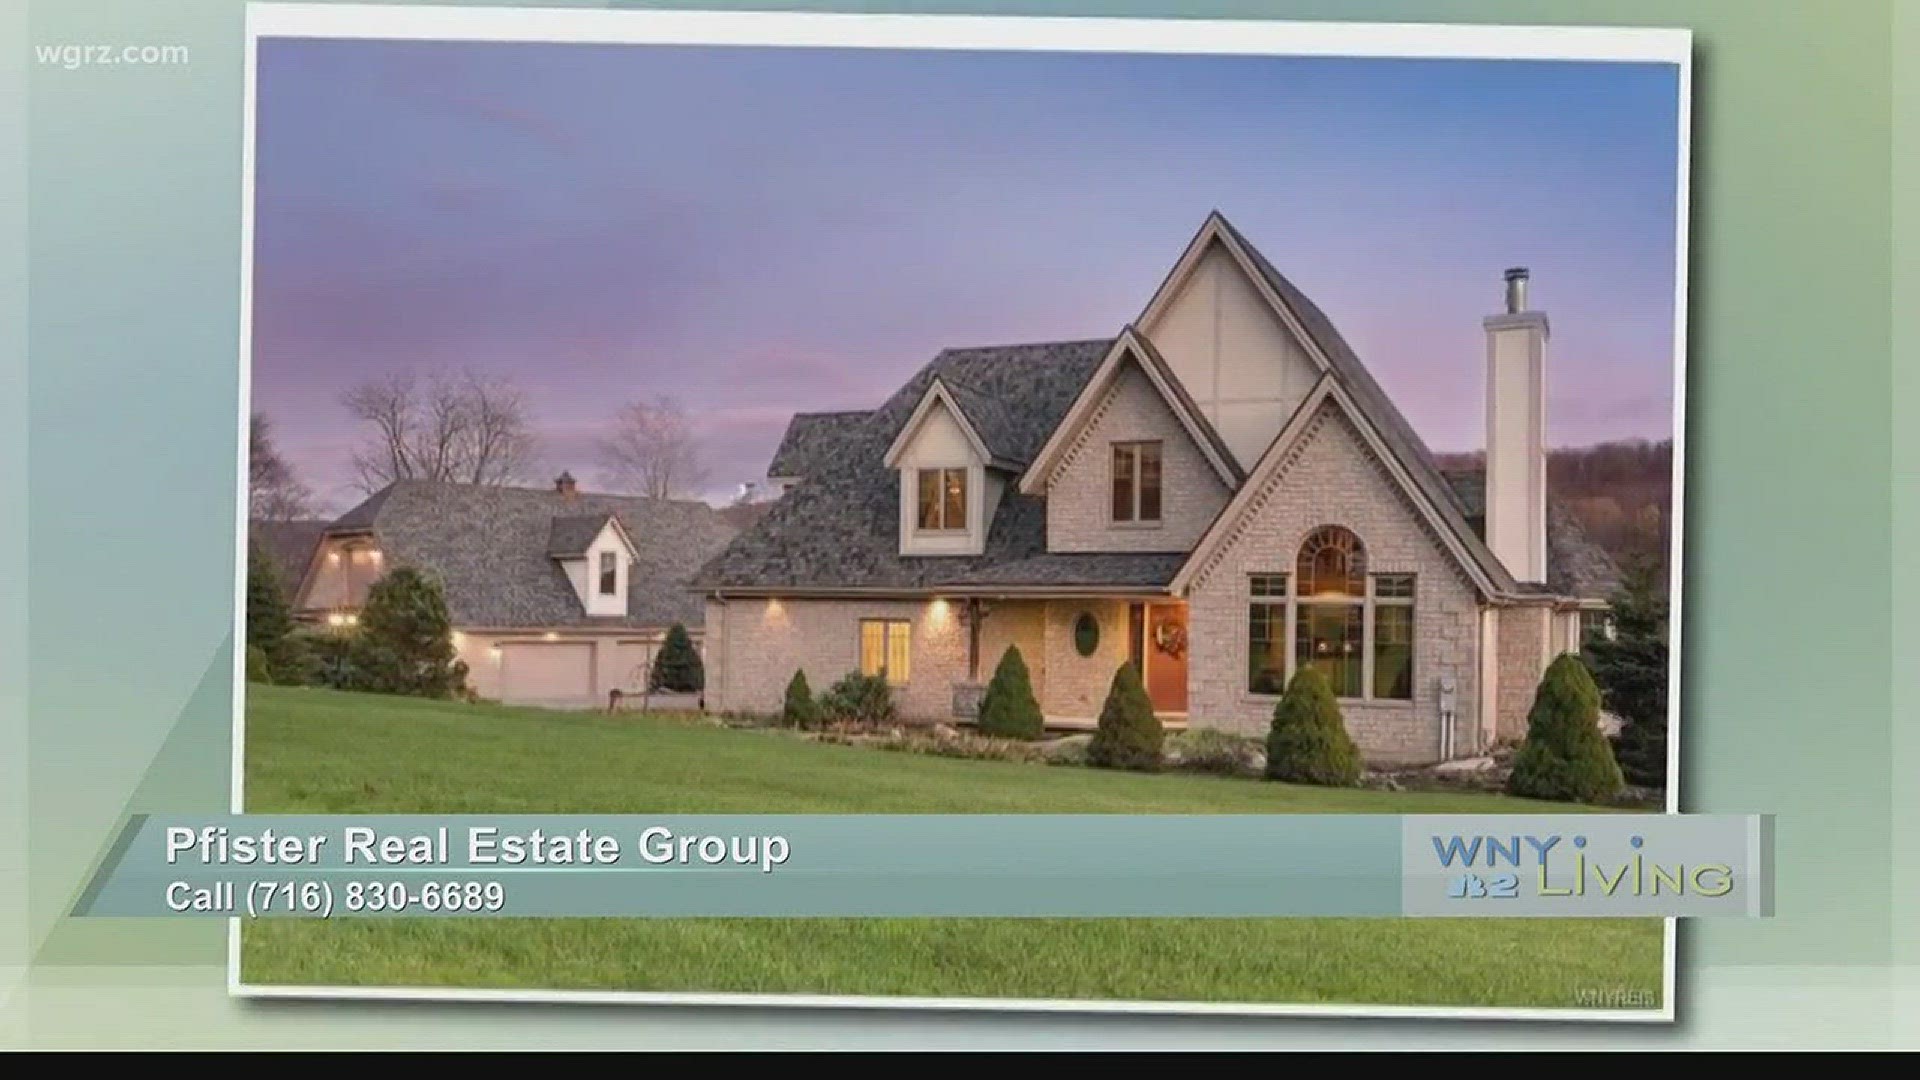 WNY Living - February 24 - Pfister Real Estate